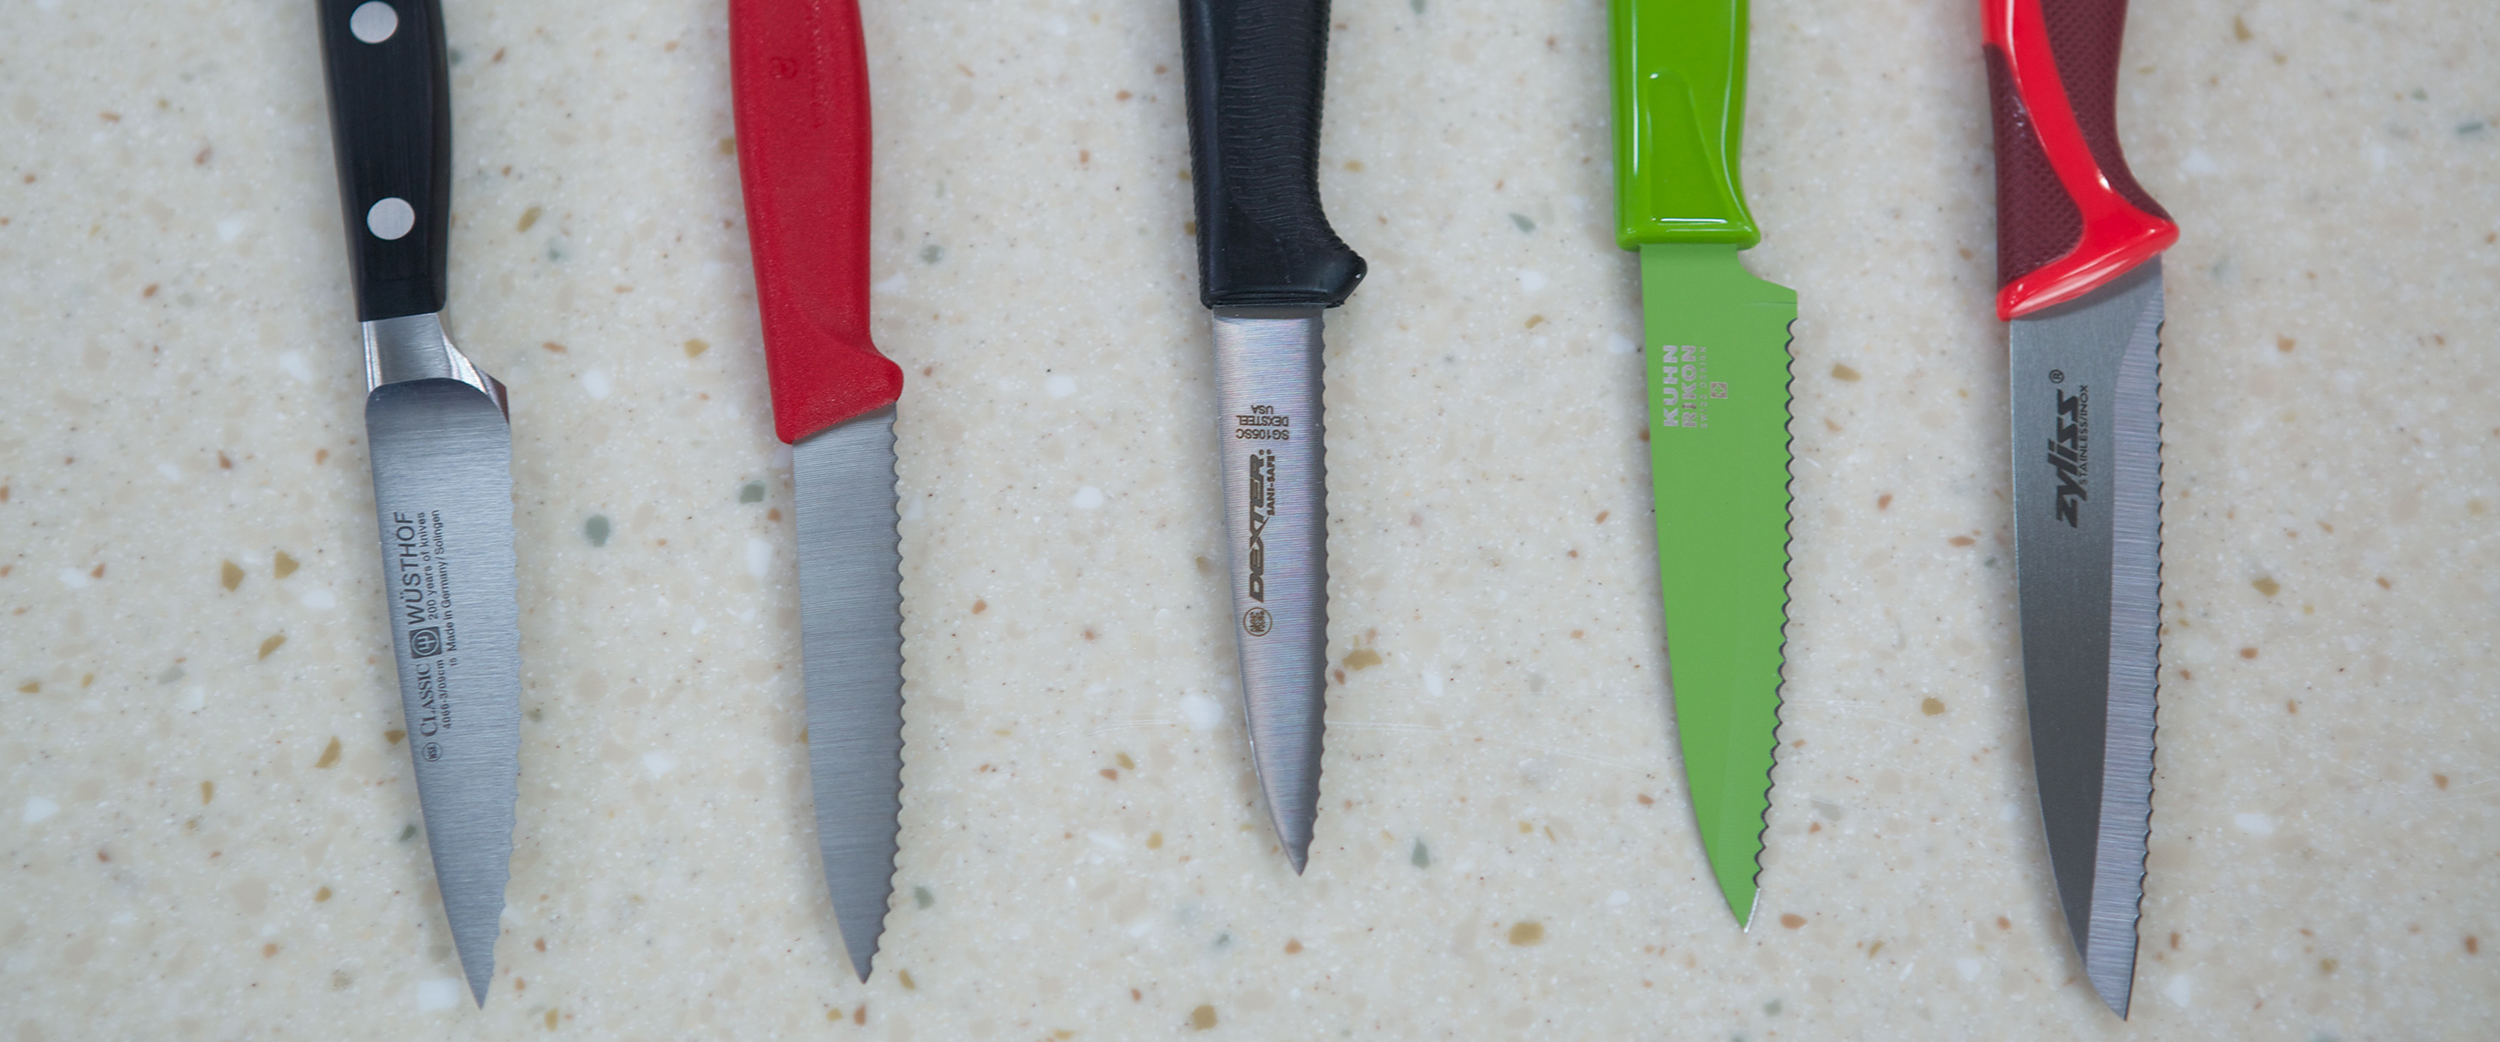 Kuhn Rikon Colori 4 Serrated Paring Knife at Swiss Knife Shop